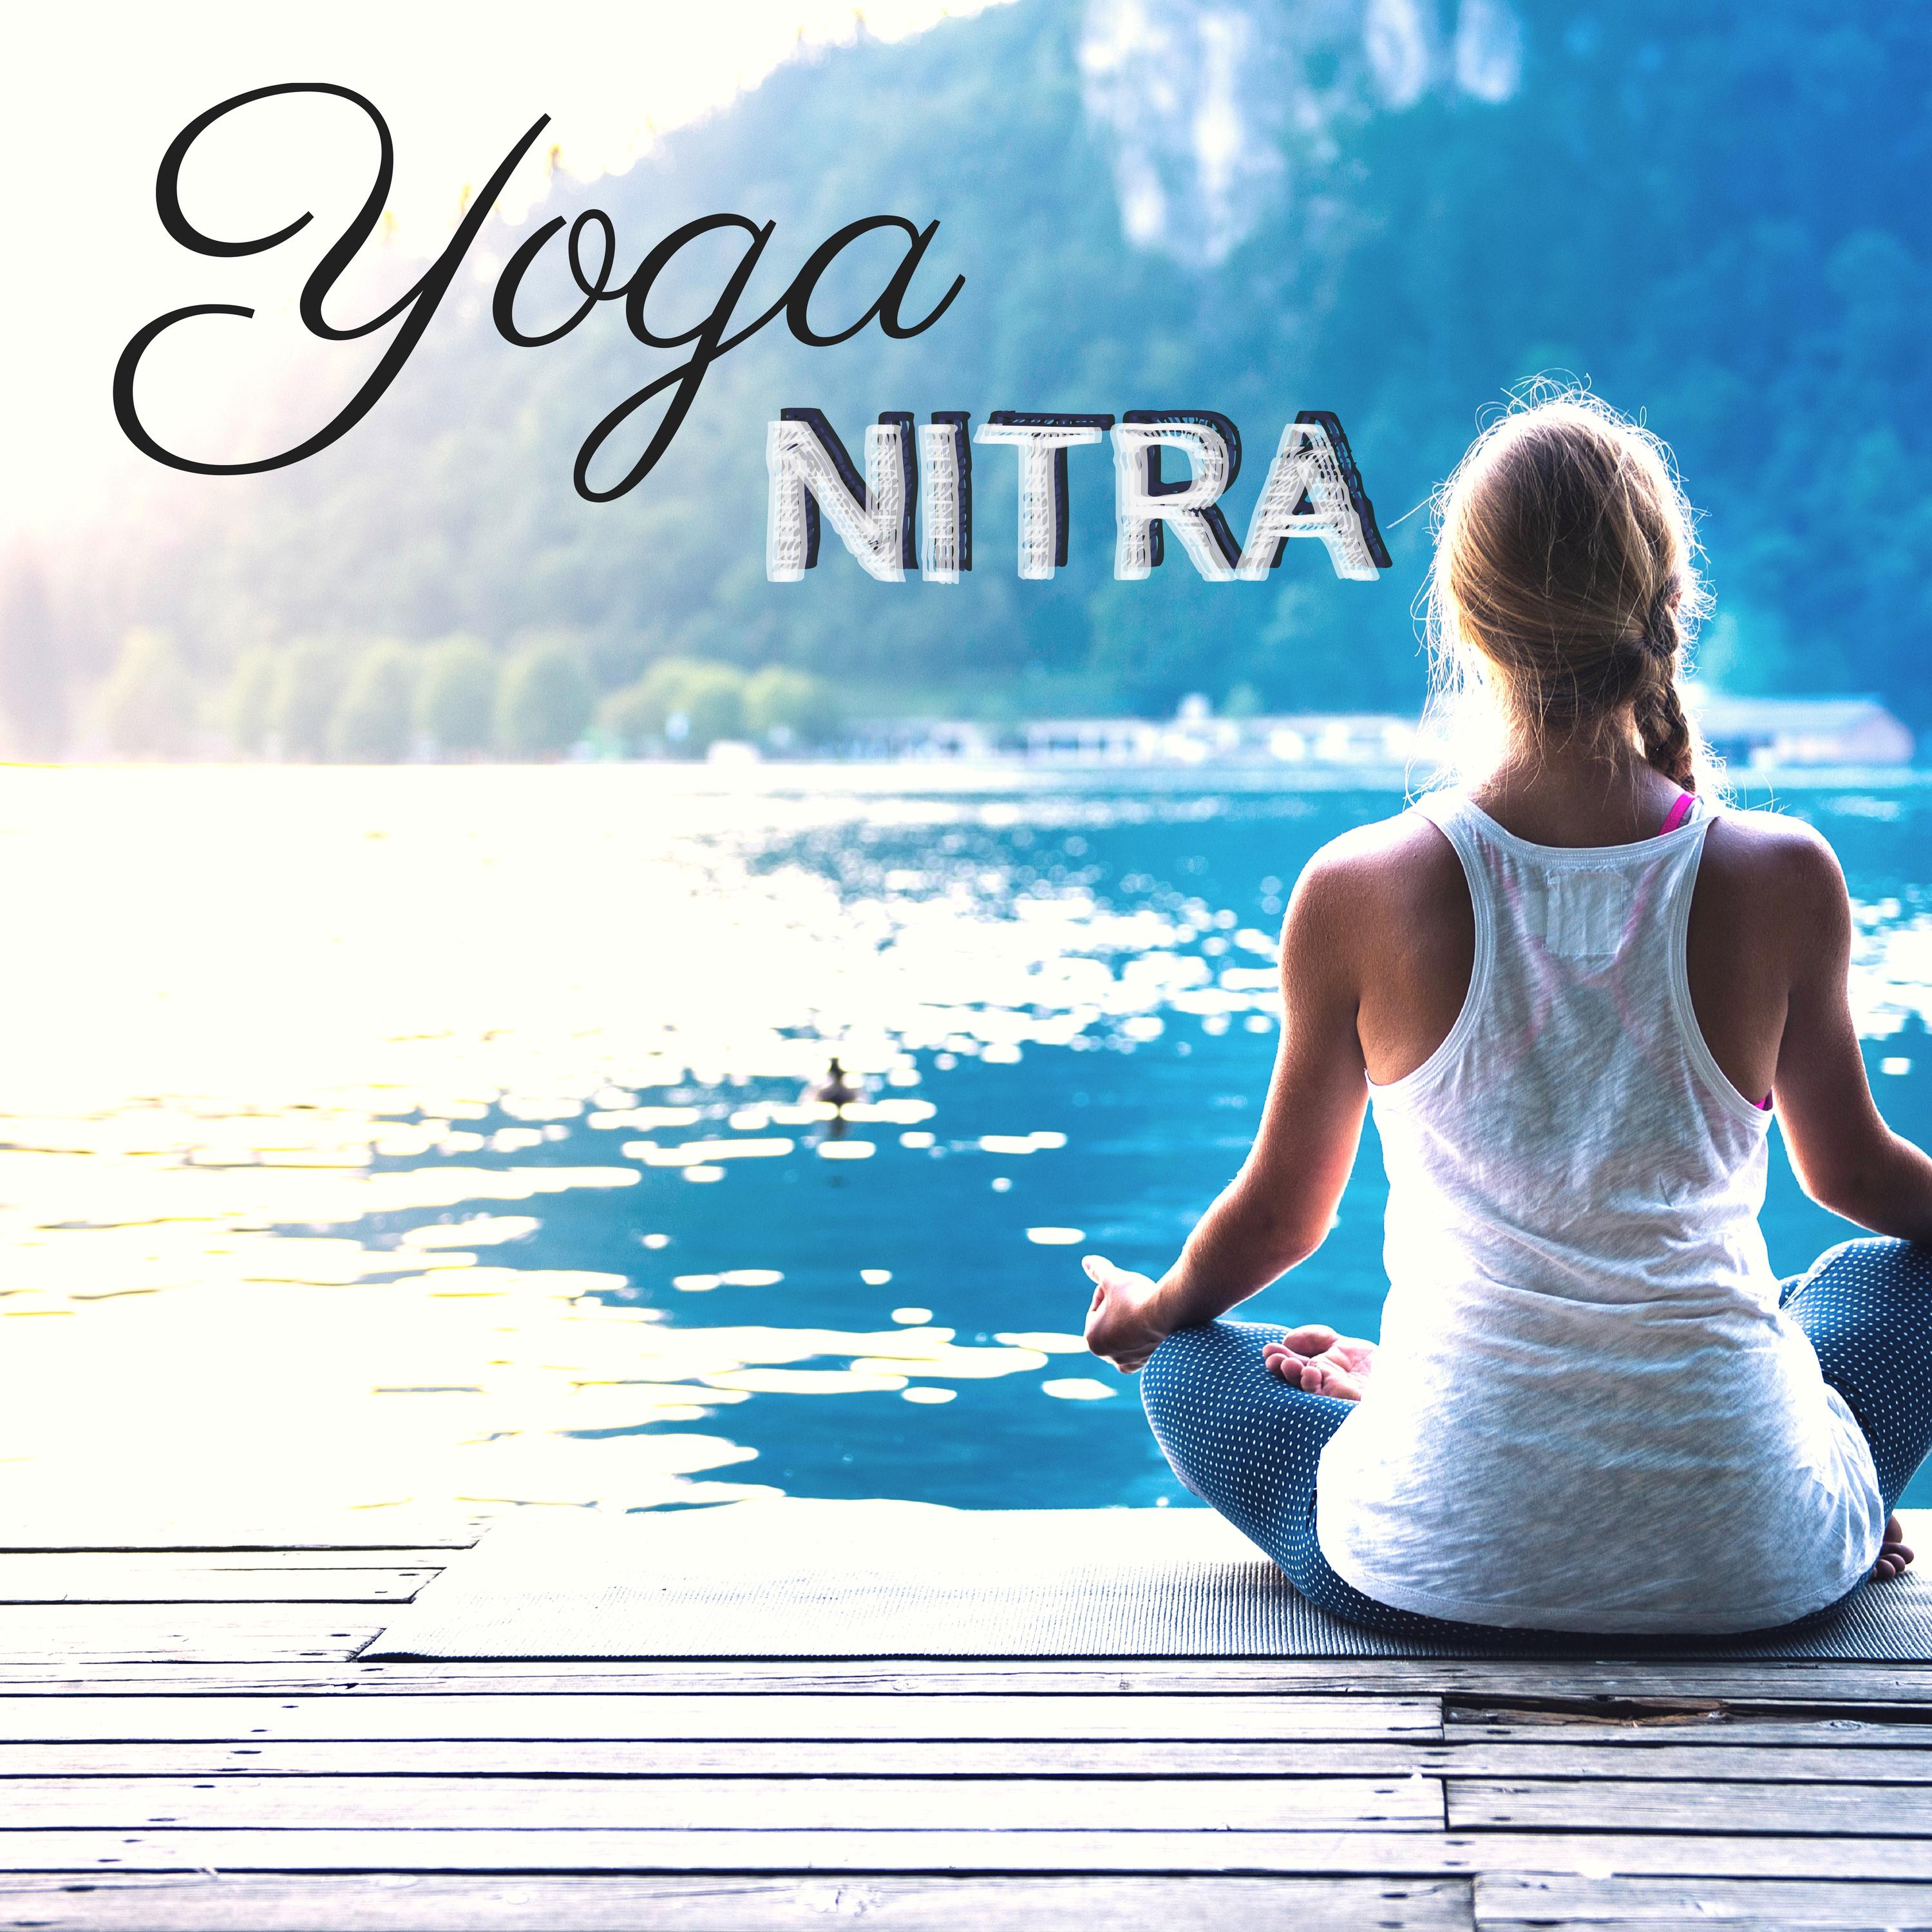 Yoga Nitra - Lounge Peaceful Background for Extreme Relaxation and Meditation